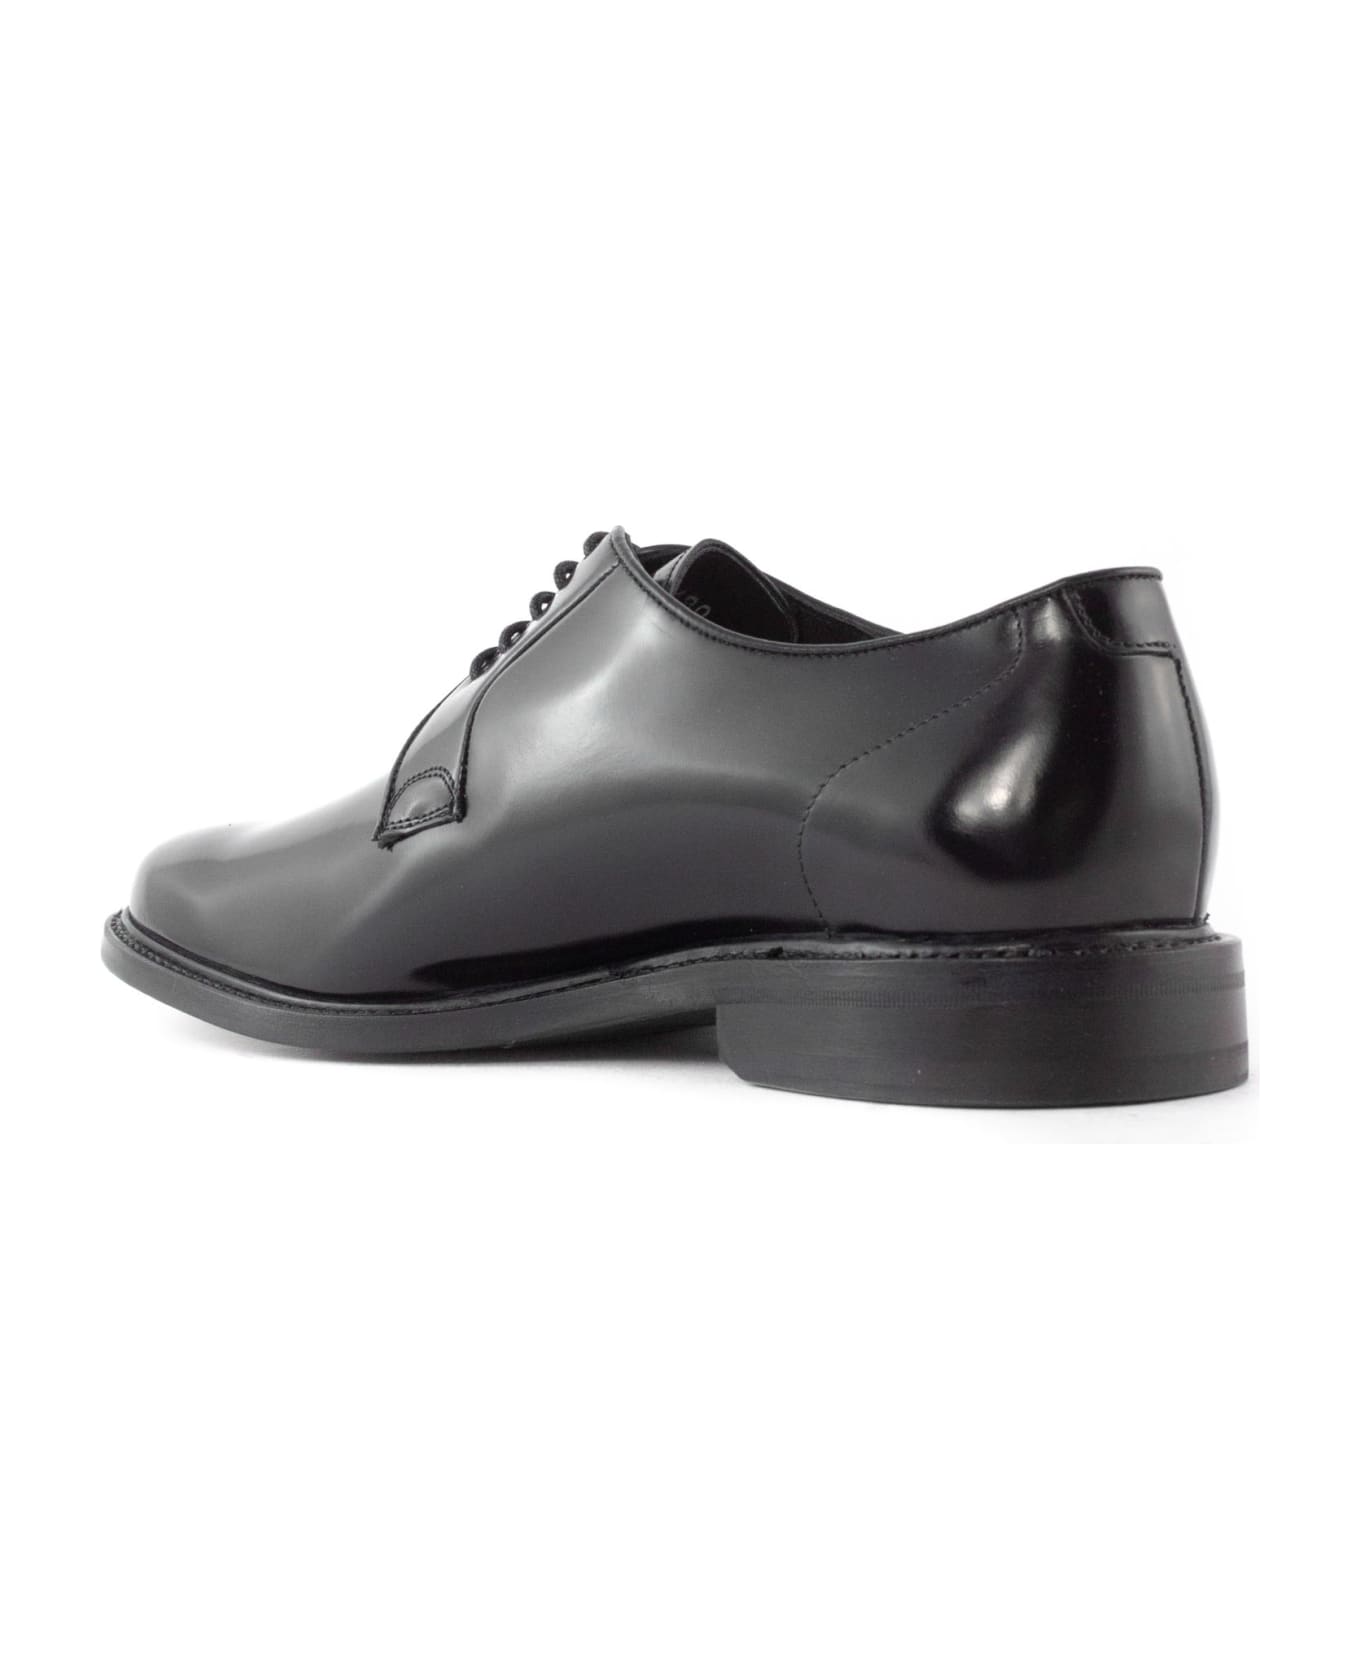 Berwick 1707 Black Patent Leather Derby Shoes - Black